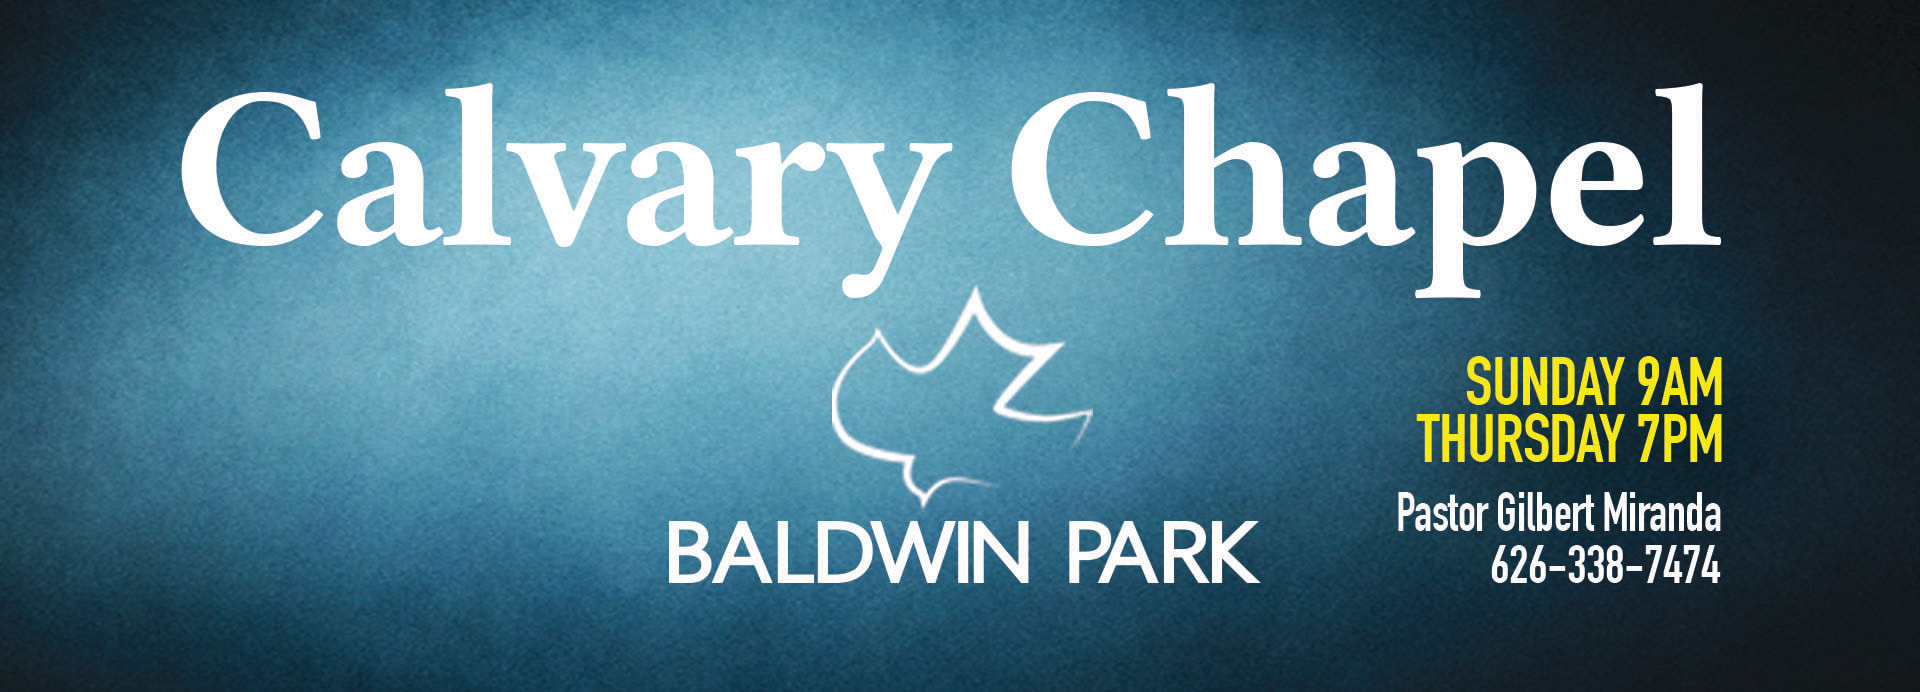 Calvary Chapel Baldwin Park Home